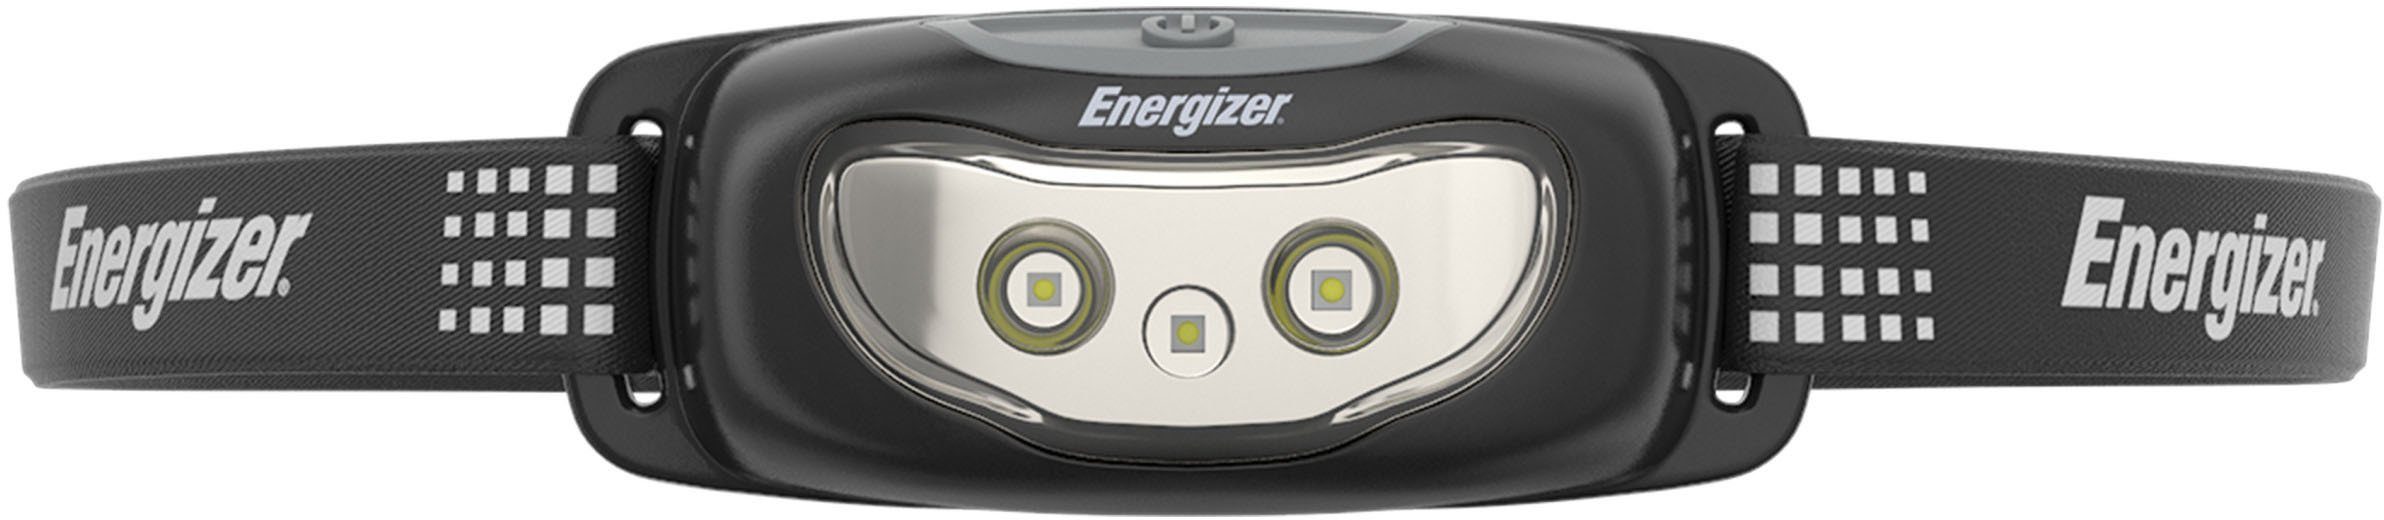 Headlight Universal+ Stirnlampe Kopflampe Energizer